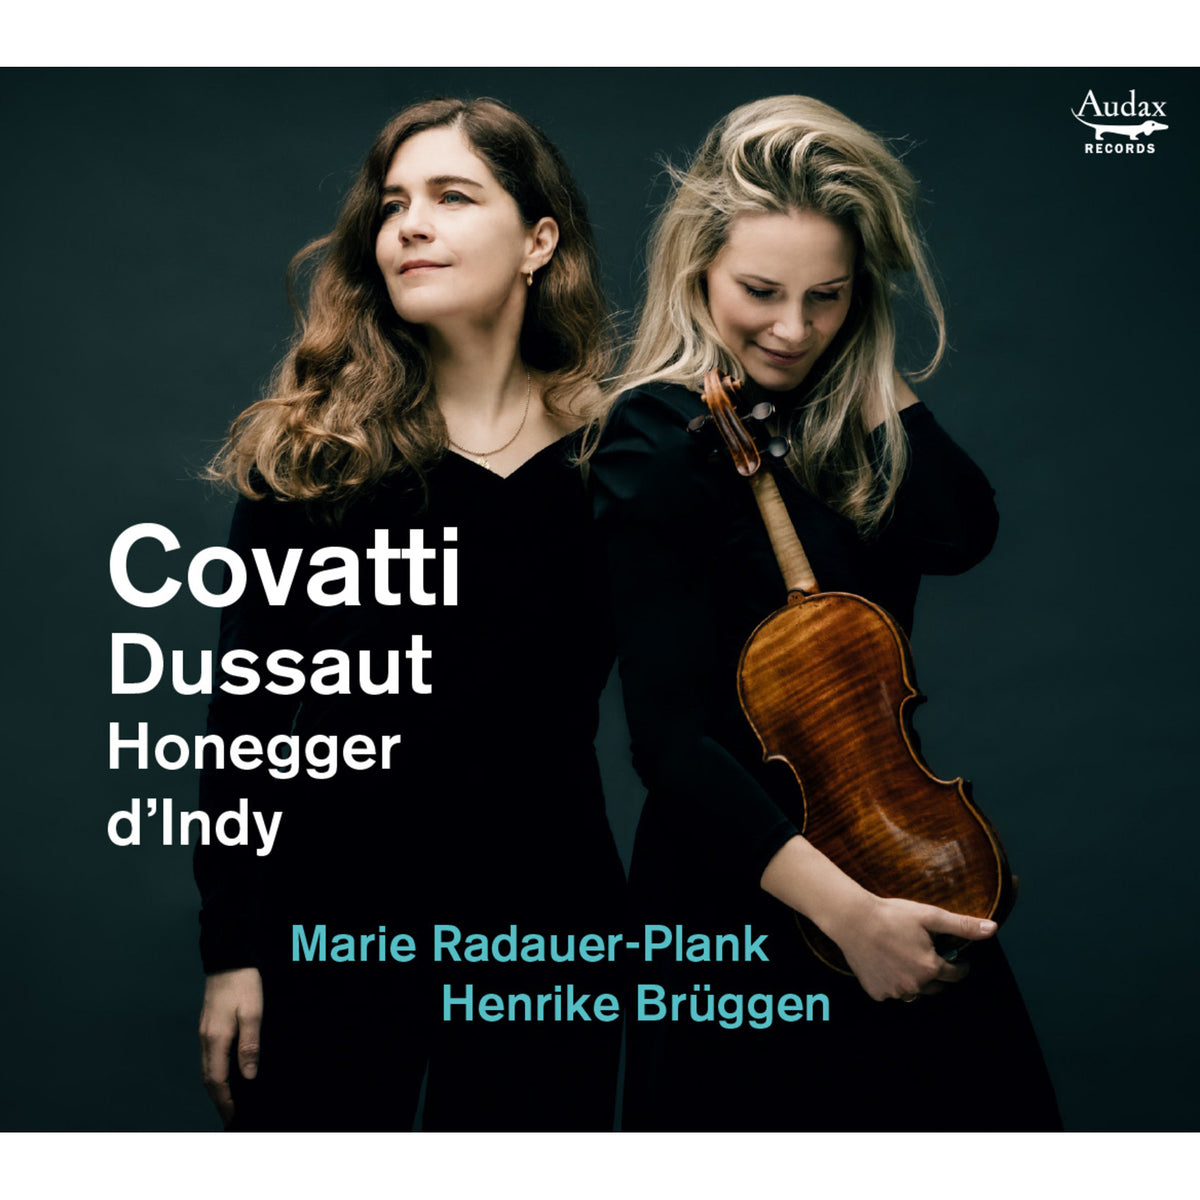 Marie Radauer-Plank, Henrike Bruggen - Covatti, Dussaut, Honegger, d'Indy: Sonatas for Violin and Piano - ADX11208